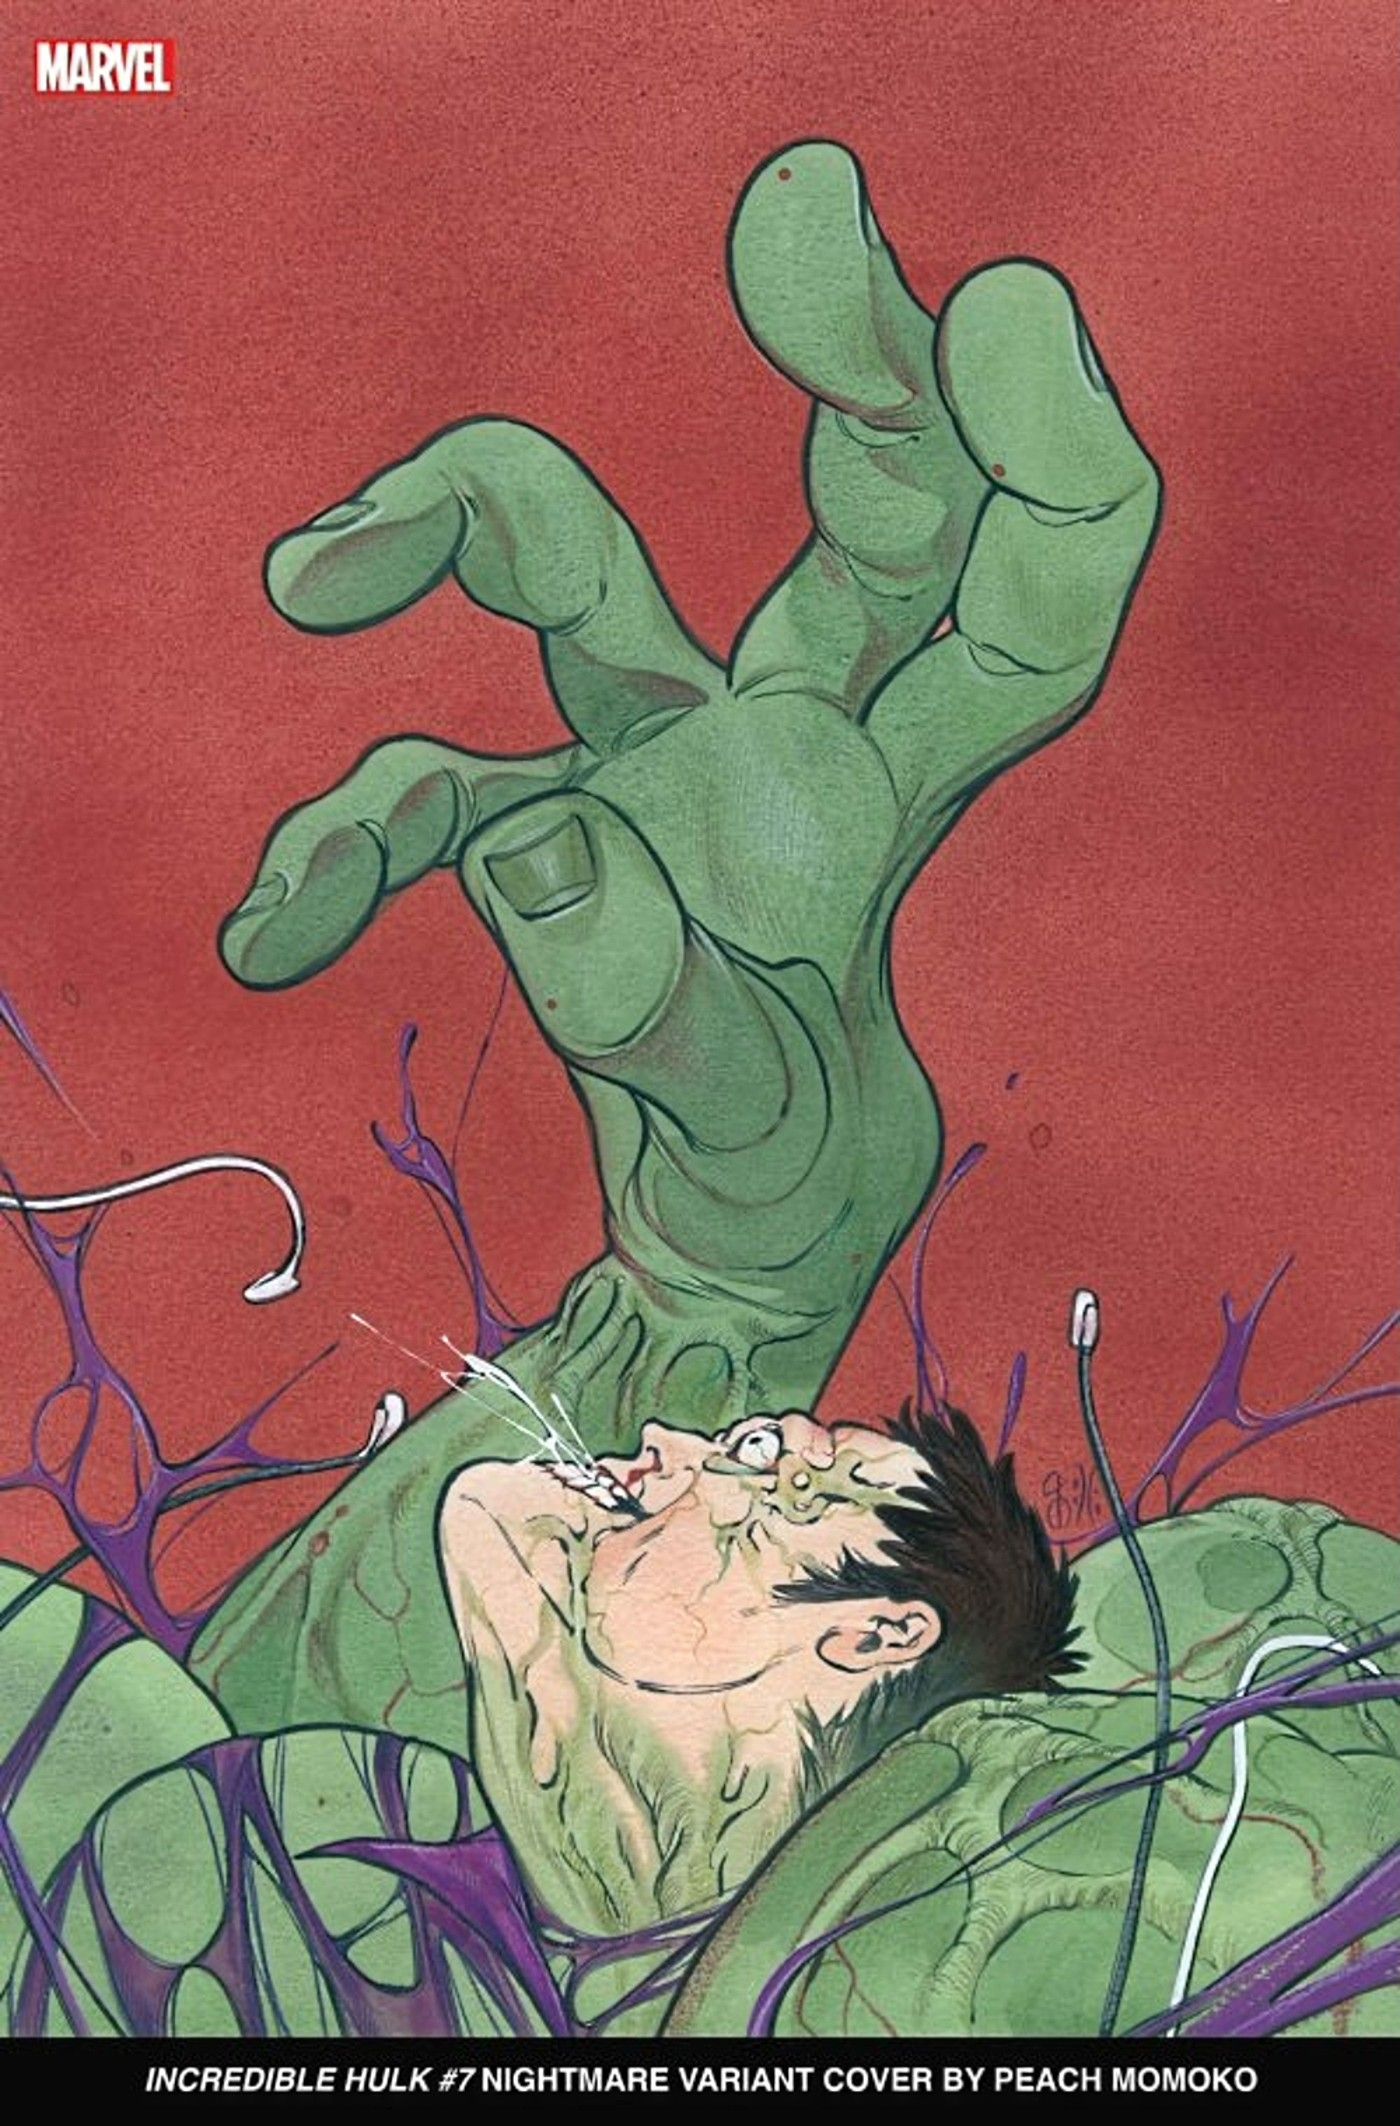 Peace Momoko Nightmare variant cover for Incredible Hulk #7